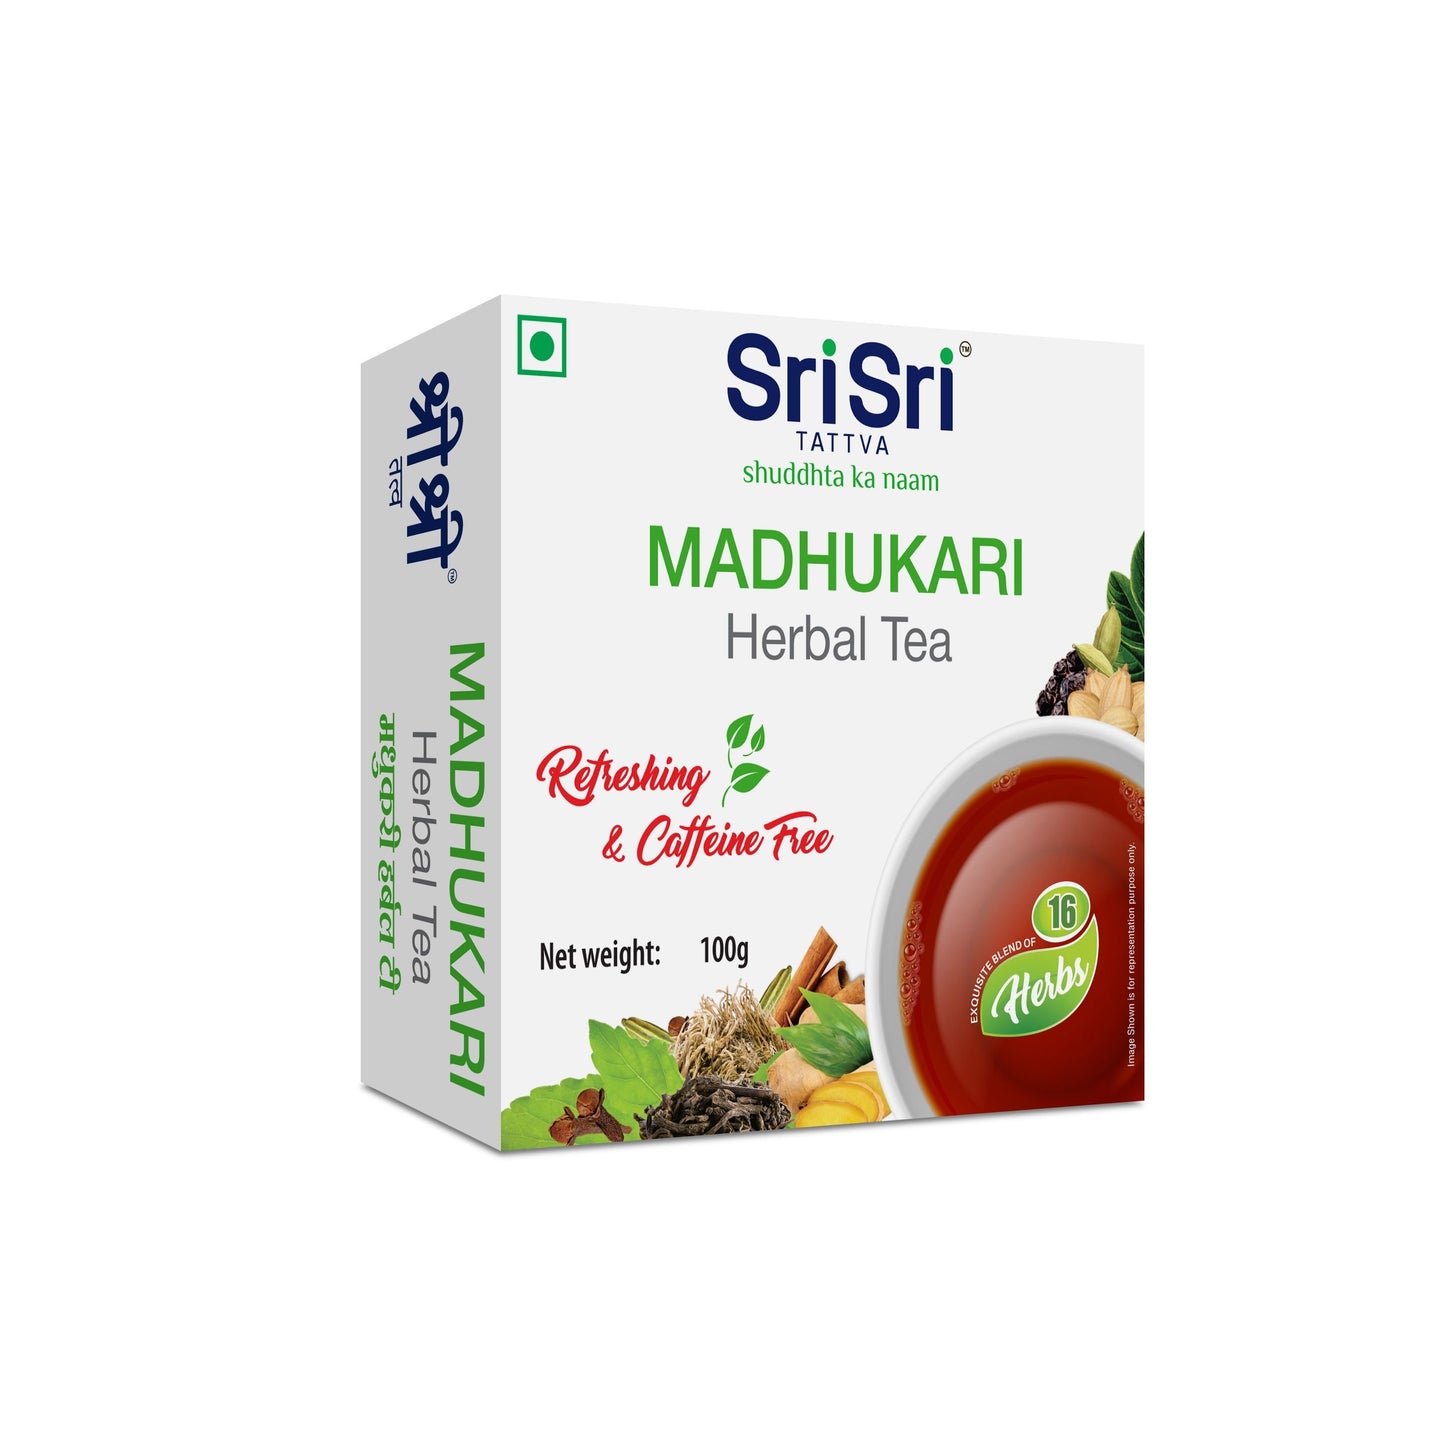 Madhukari Herbal Tea, 100g - Sri Sri Tattva